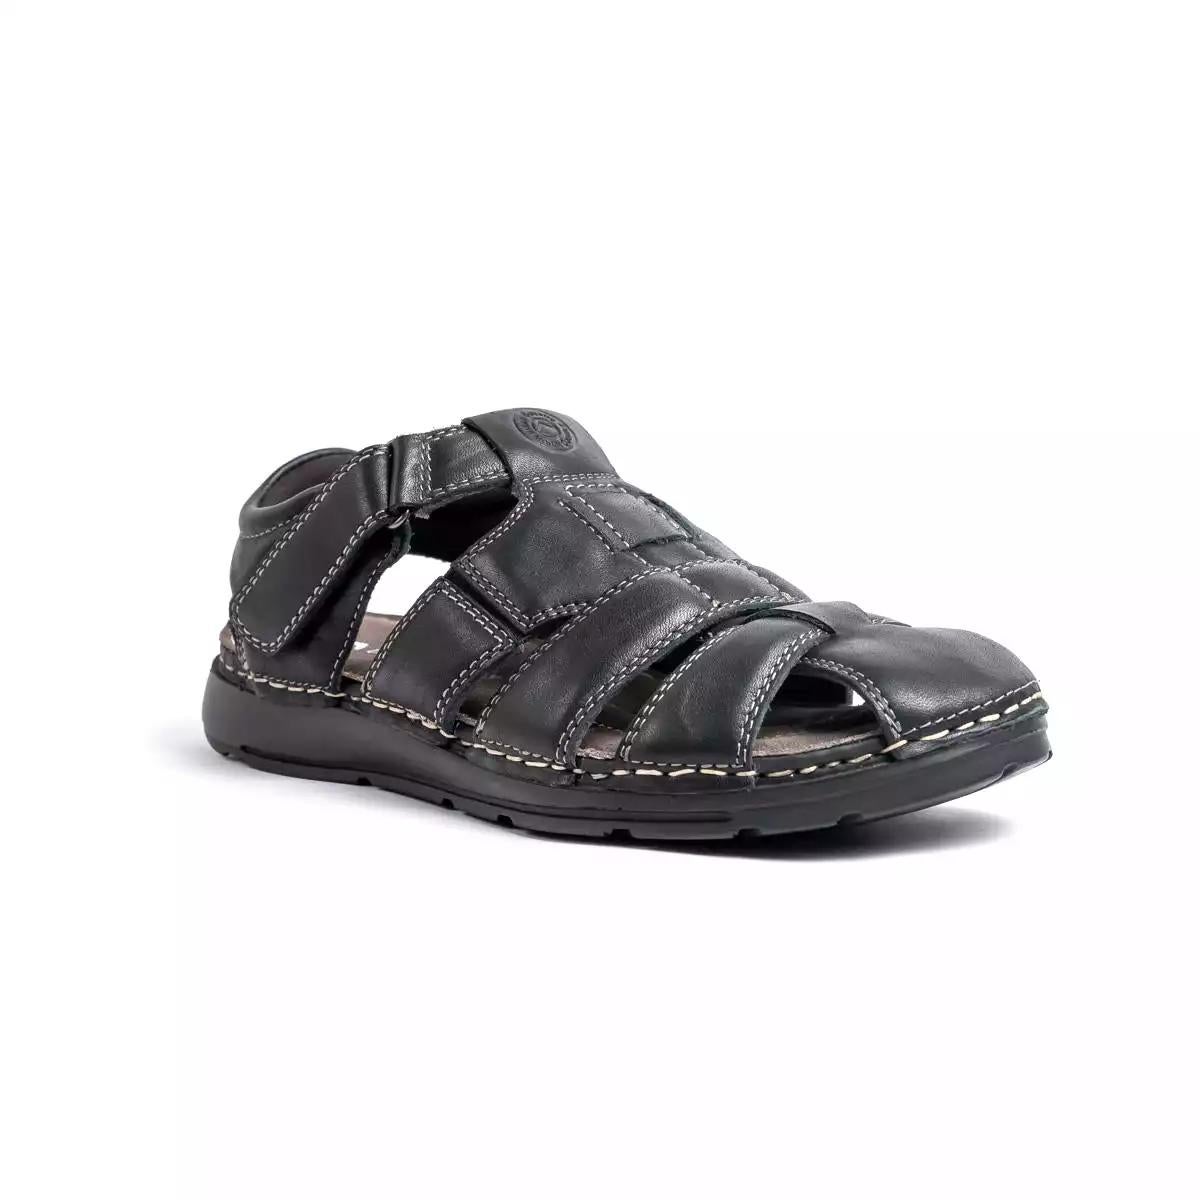 Men Leather Casual Sandals ǀ ADVENTURE 6413